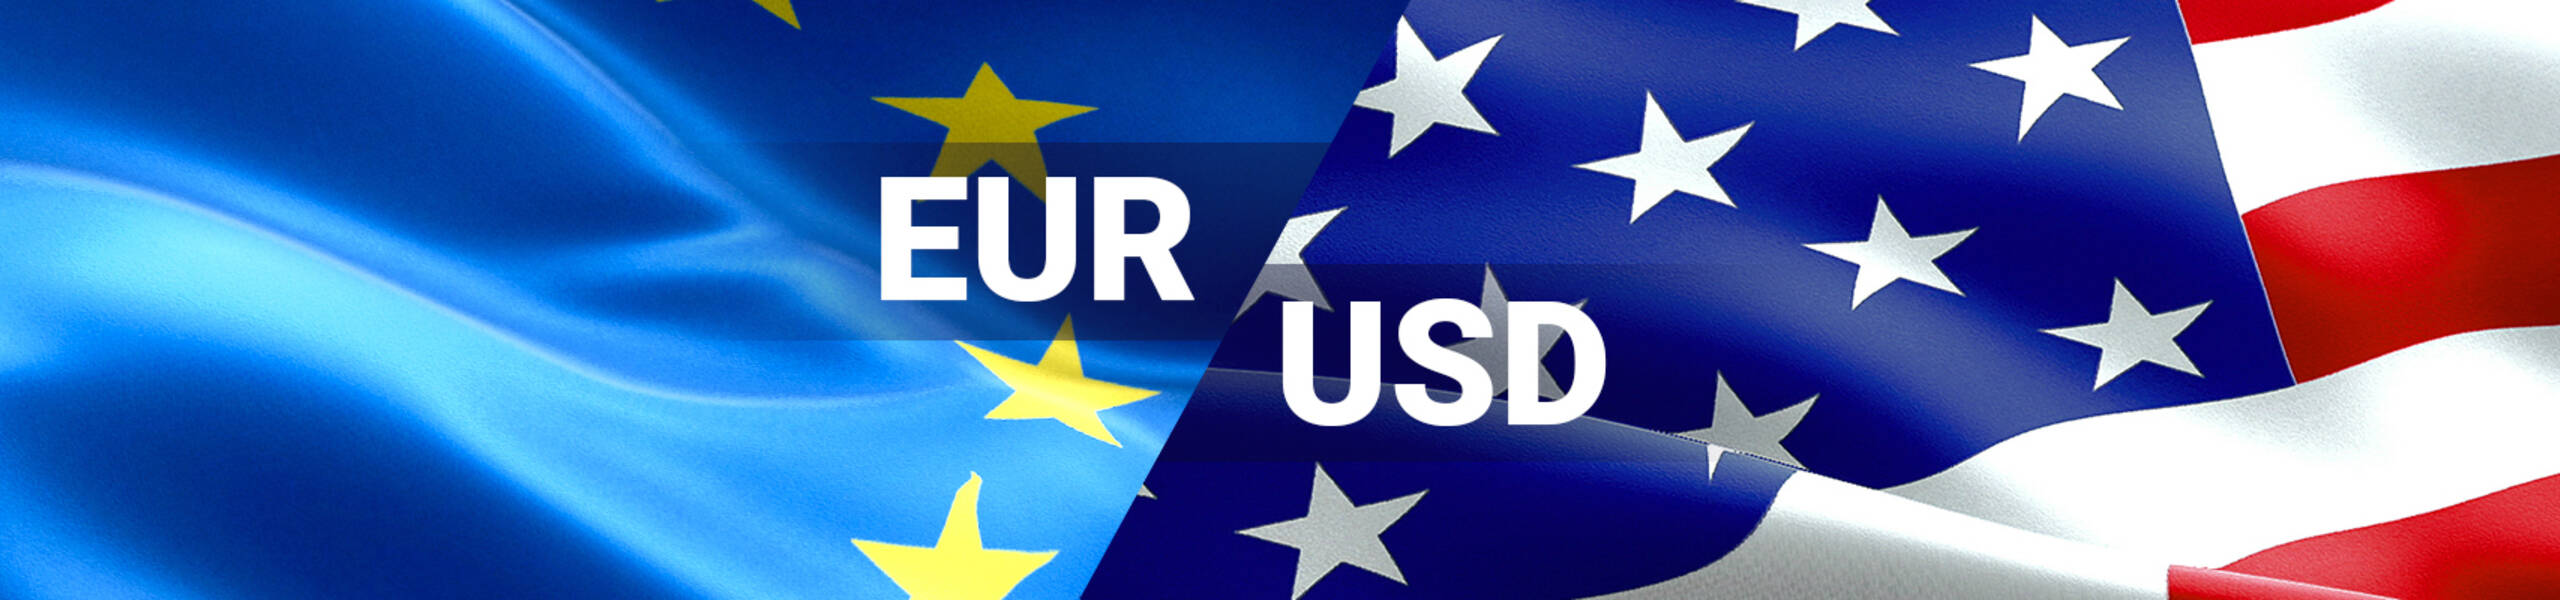 Loan Officer Survey ของสหรัฐและ Sentix Investor Confidence ของยูโรโซน EURUSD อาจจะผันผวน